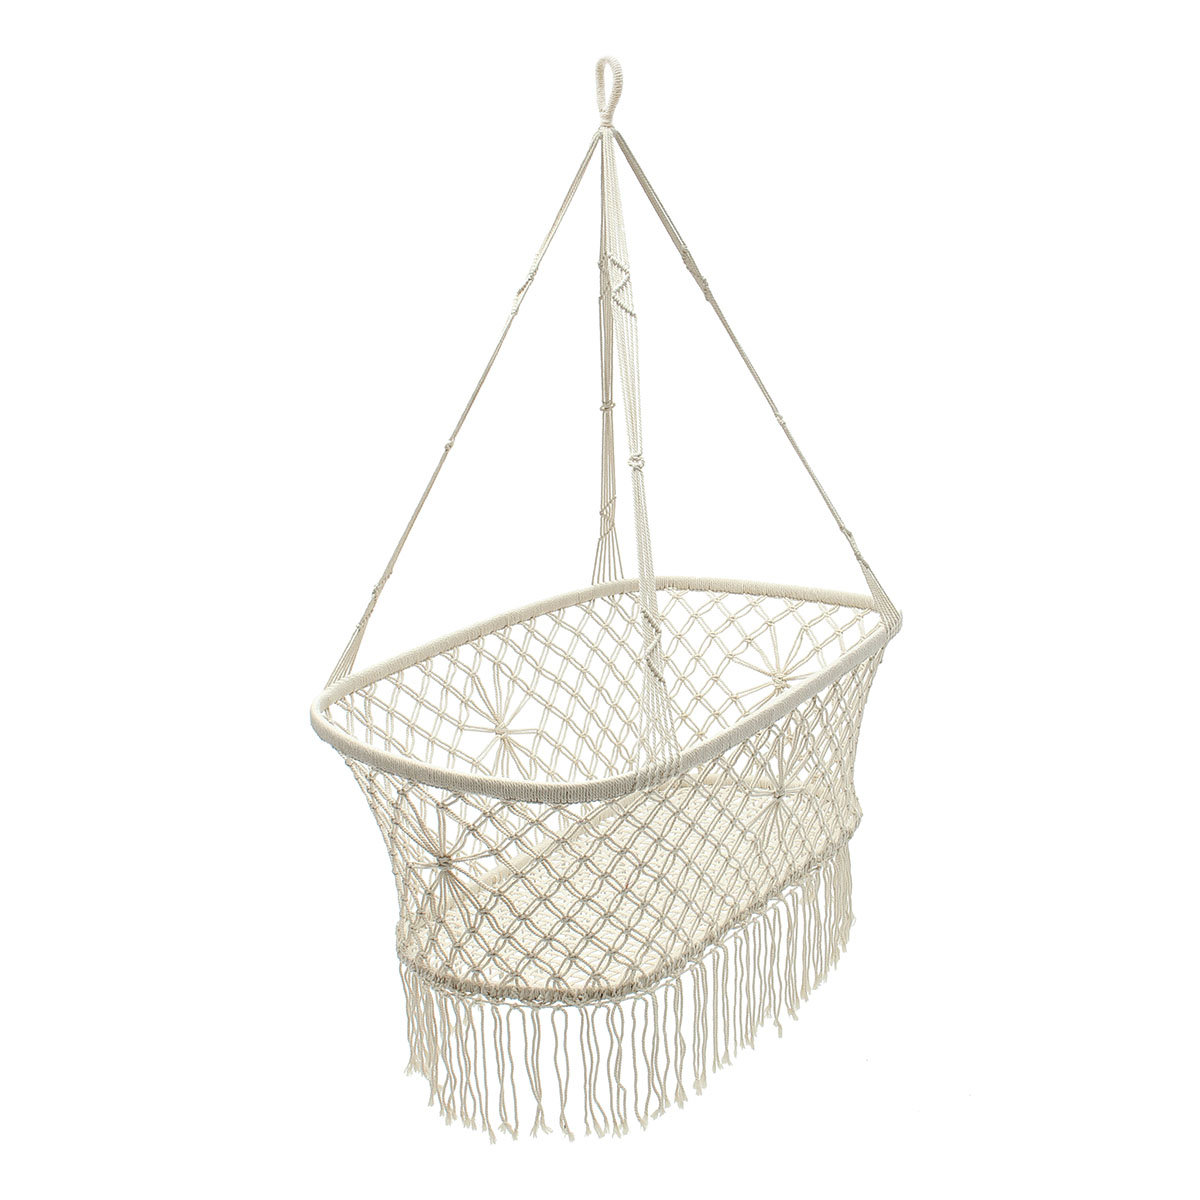 Baby Garden Hanging Hammock Cotton Woven Rope Swing Patio Chair Seat 90*87*57cm